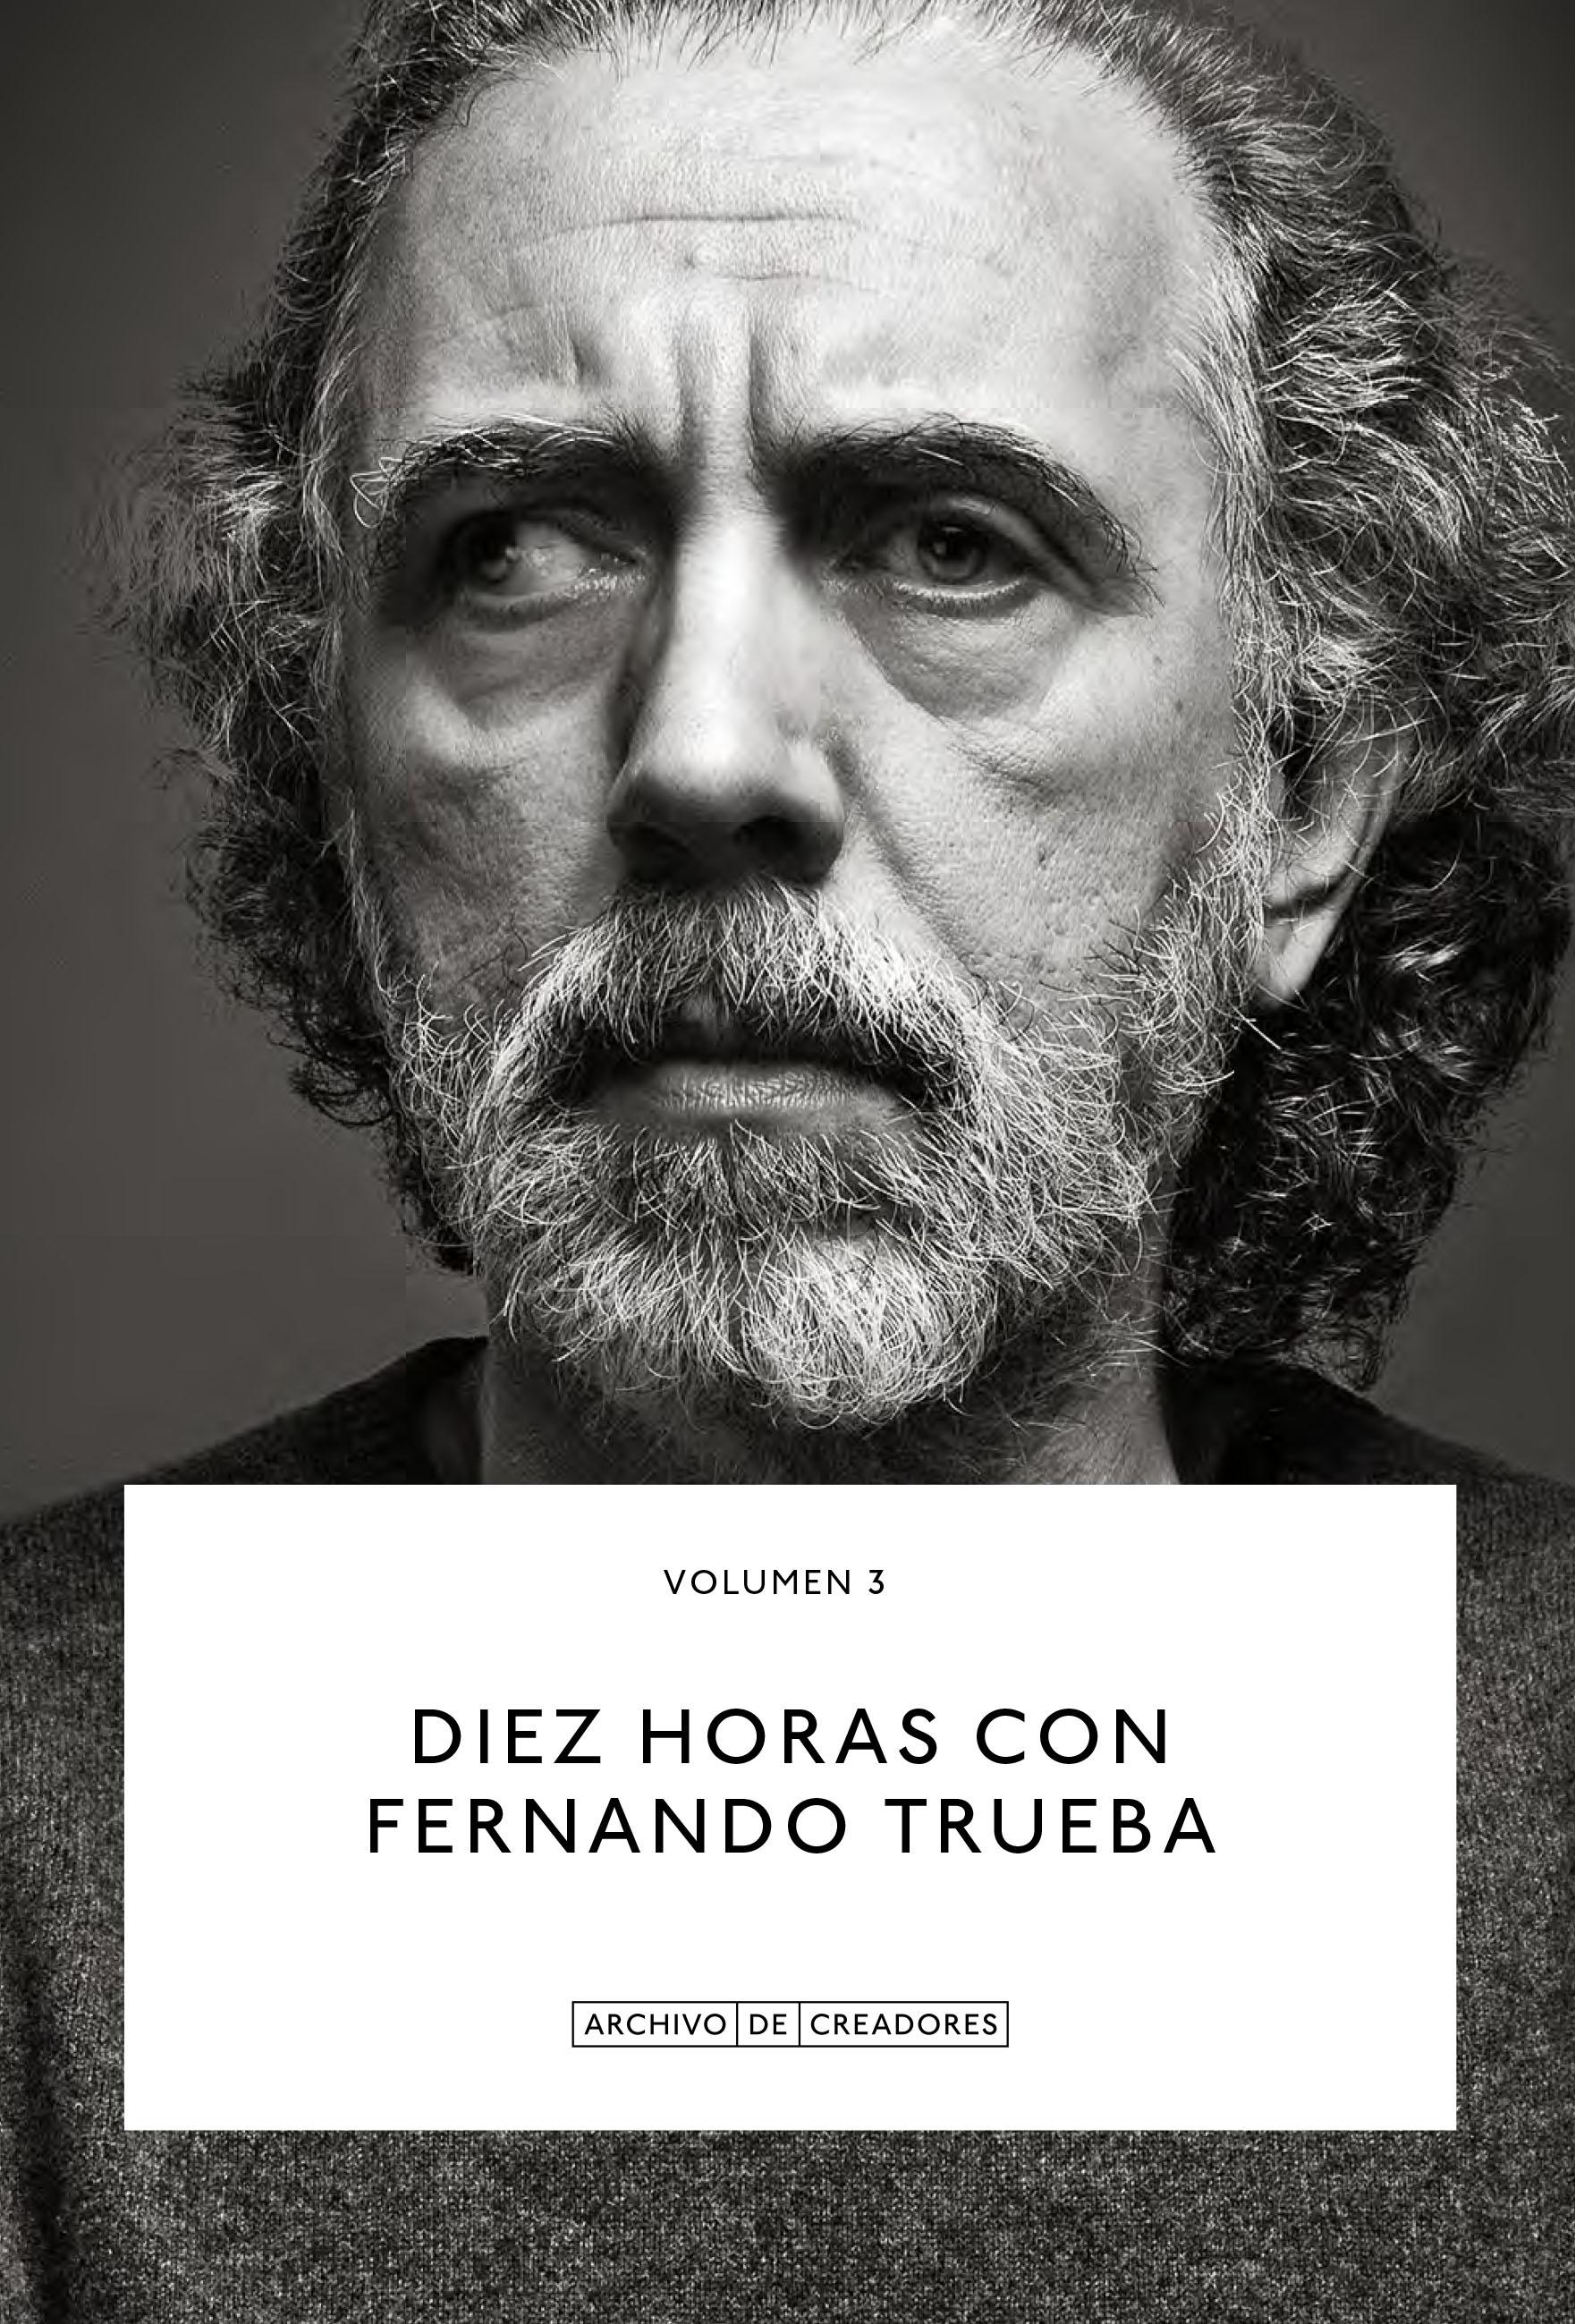 Diez horas con Fernando Trueba  "Volumen 3"